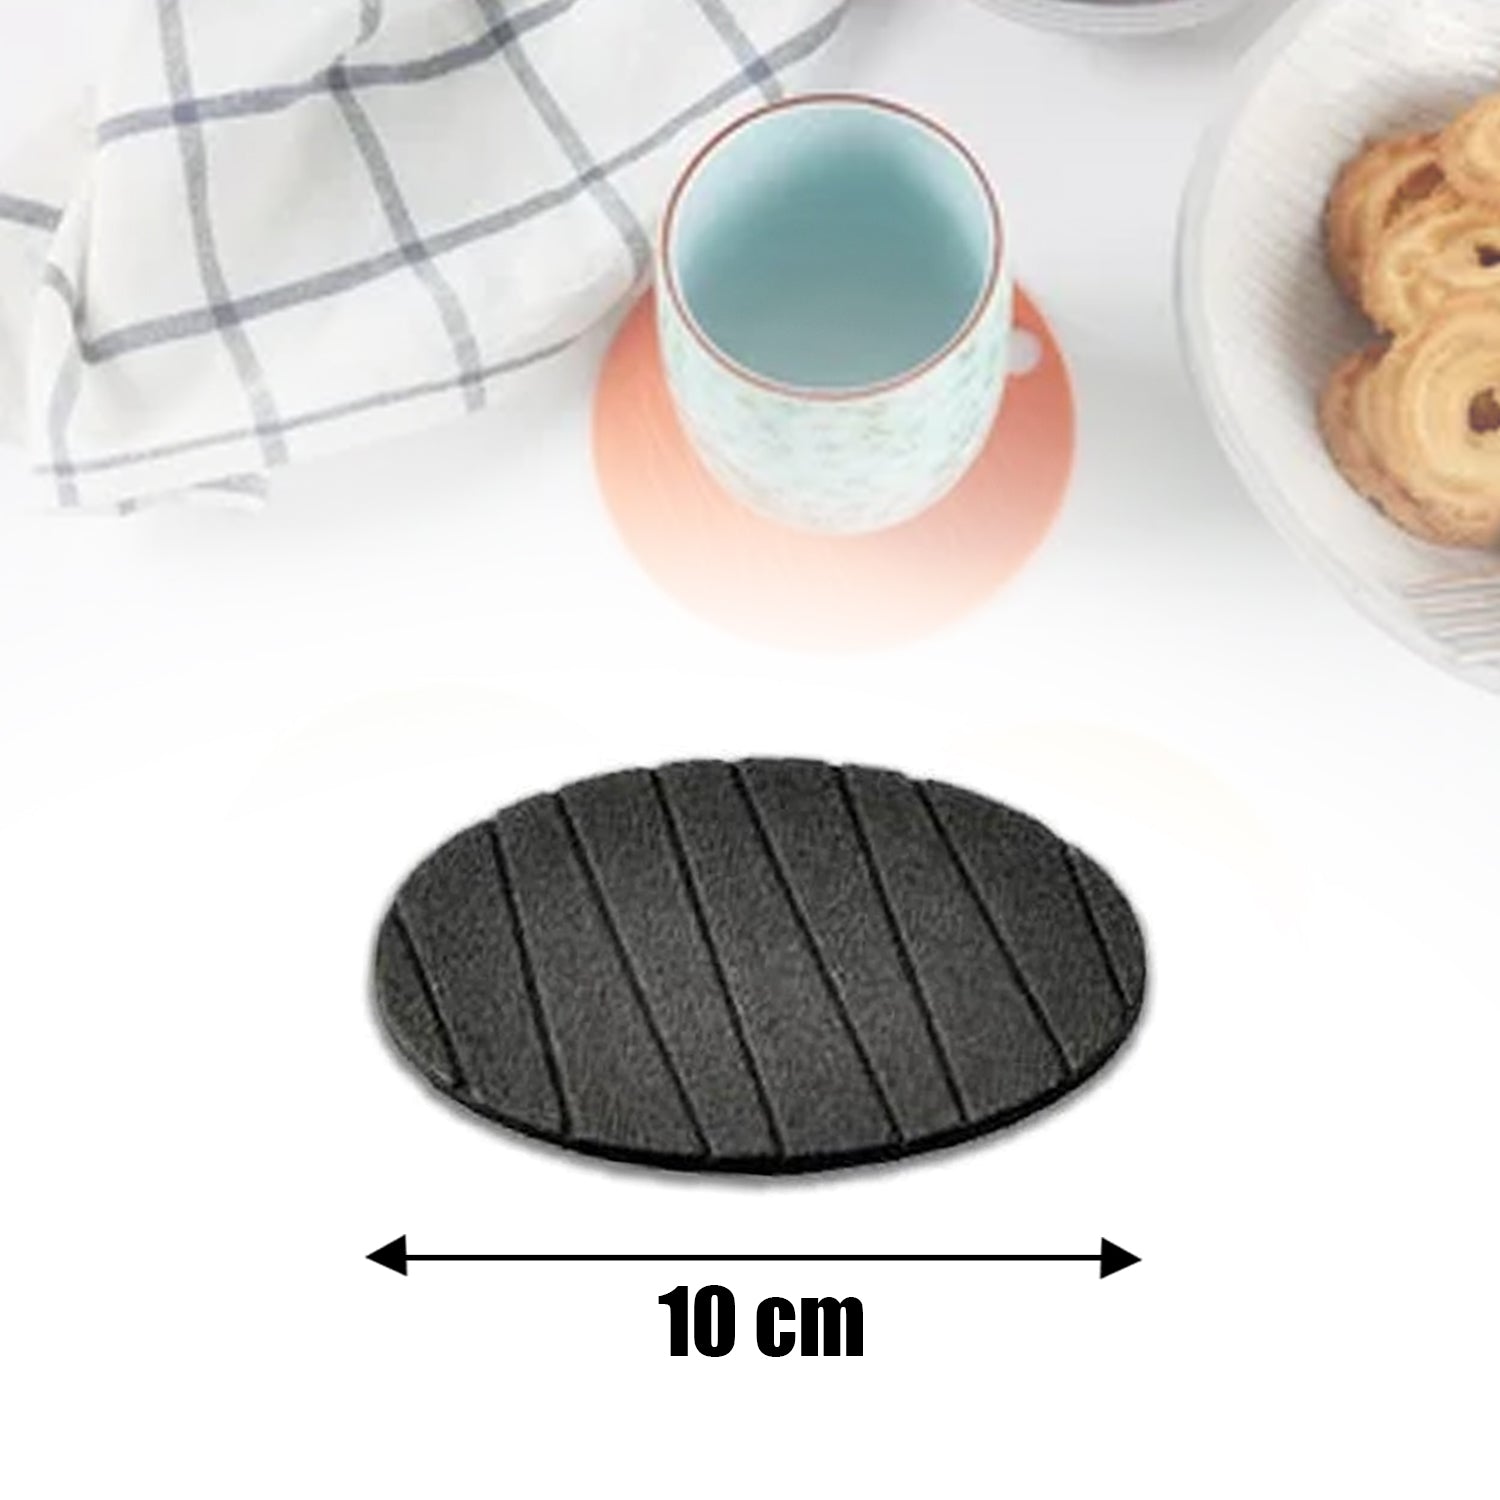 129 6 pcs Useful Round Shape Plain Silicone Cup Mat Coaster Drinking Tea Coffee Mug Wine Mat for Home 